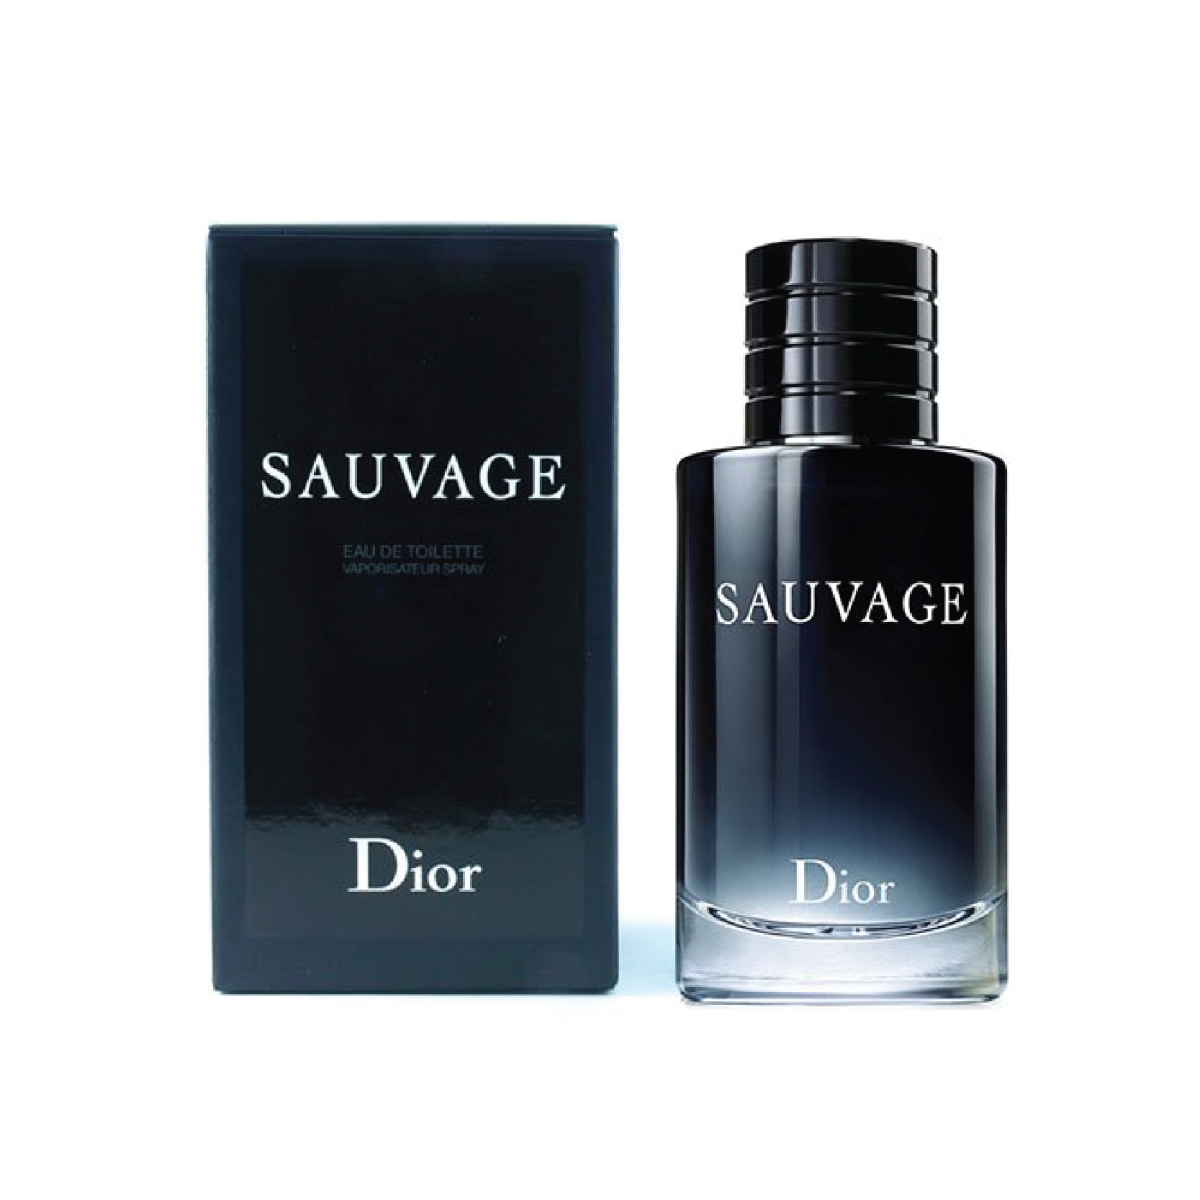 Chiết Dior Sauvage EDT 10ml  Nước hoa nam Dior Sauvage chiết